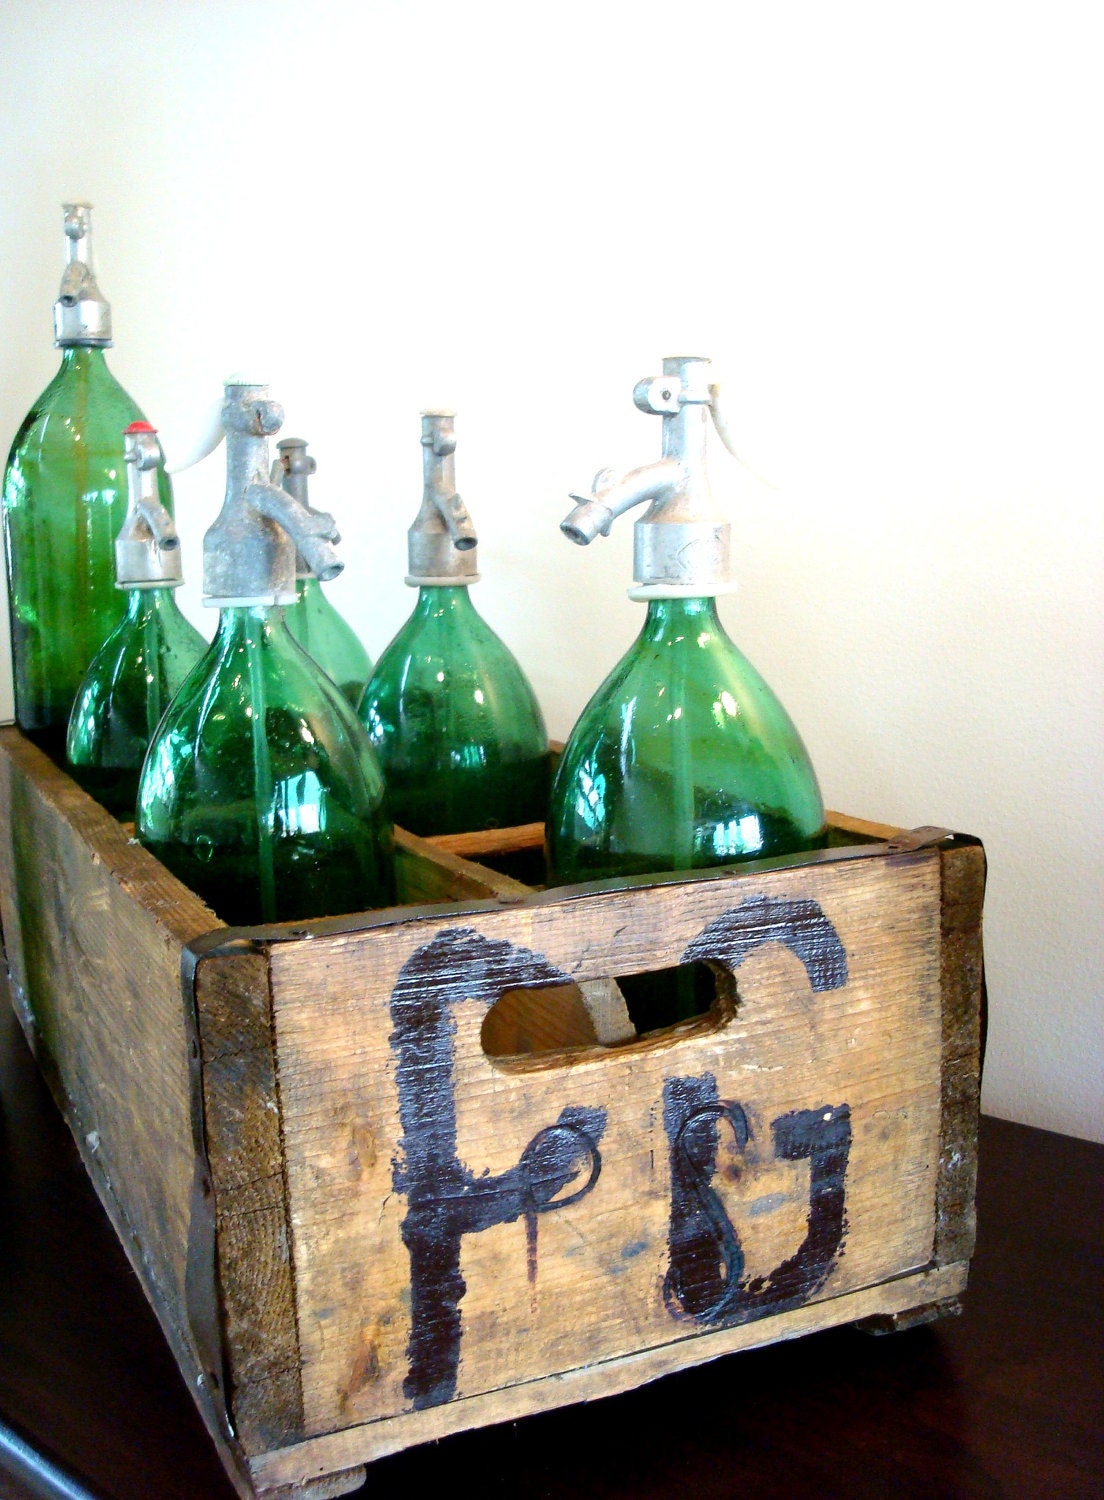 Vintage Green Seltzer Bottles purchsed in Europe, with original Spigot and straw